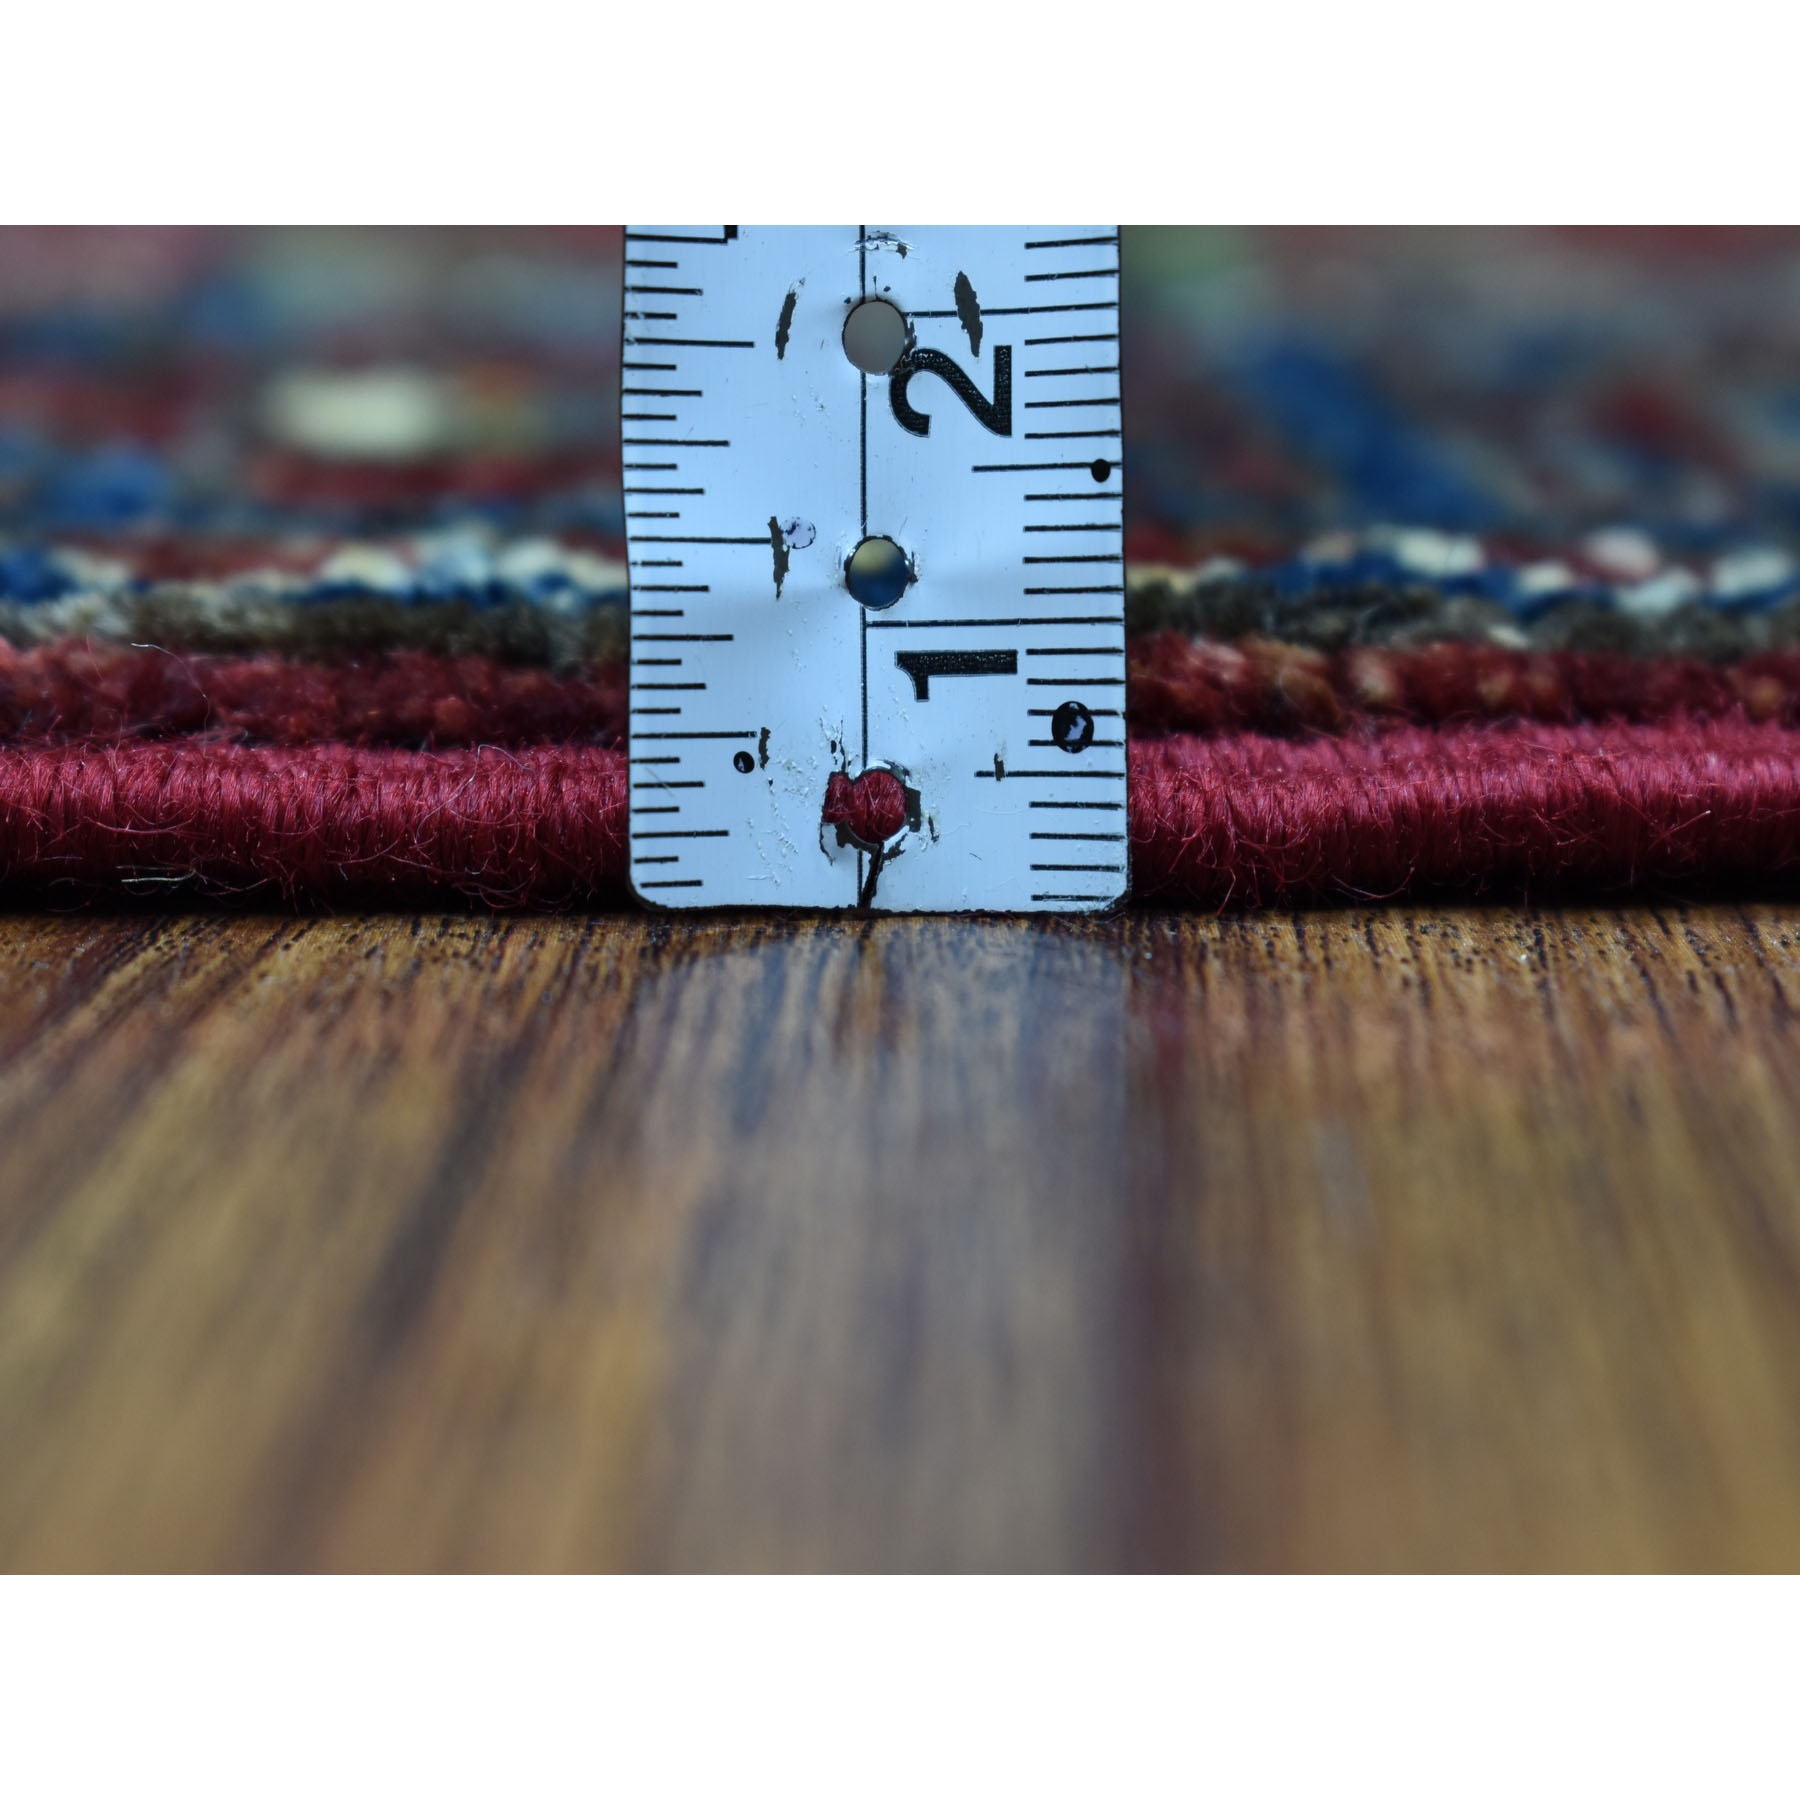 2'x3' Red Elephant Feet Design Hand Woven Afghan Ersari Pure Wool Oriental Rug 